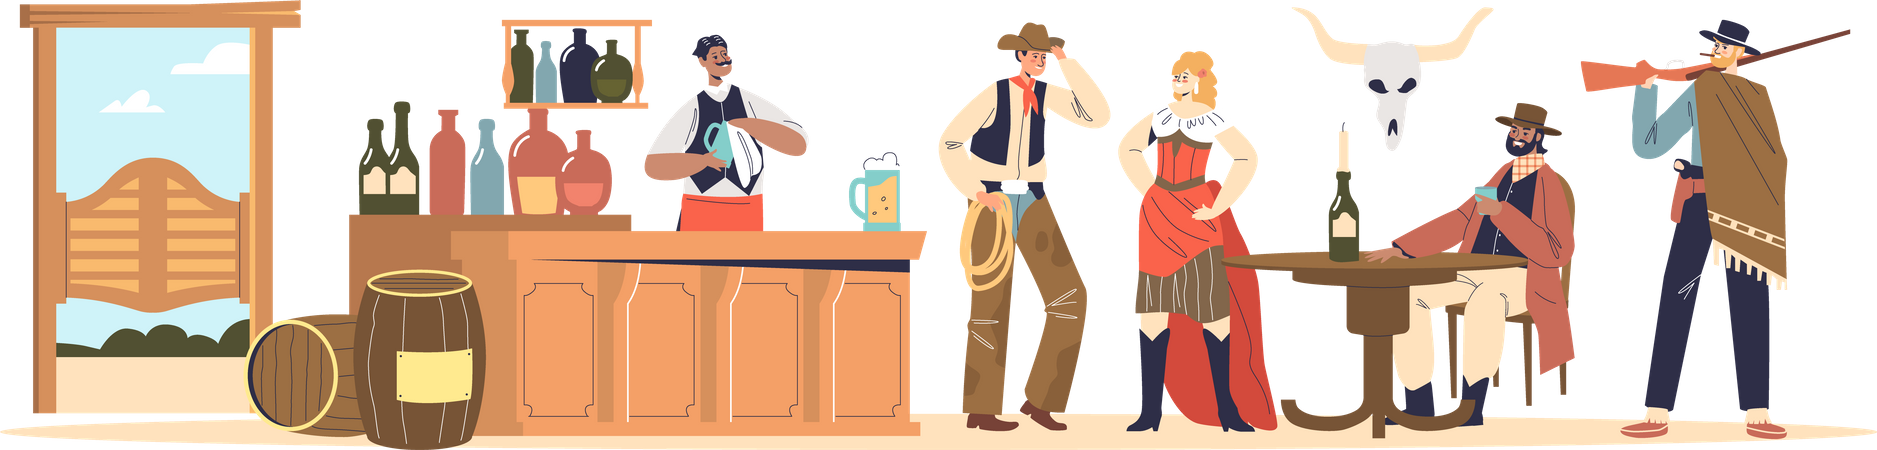 Cowboys in western clothes drinking in retro pub Illustration